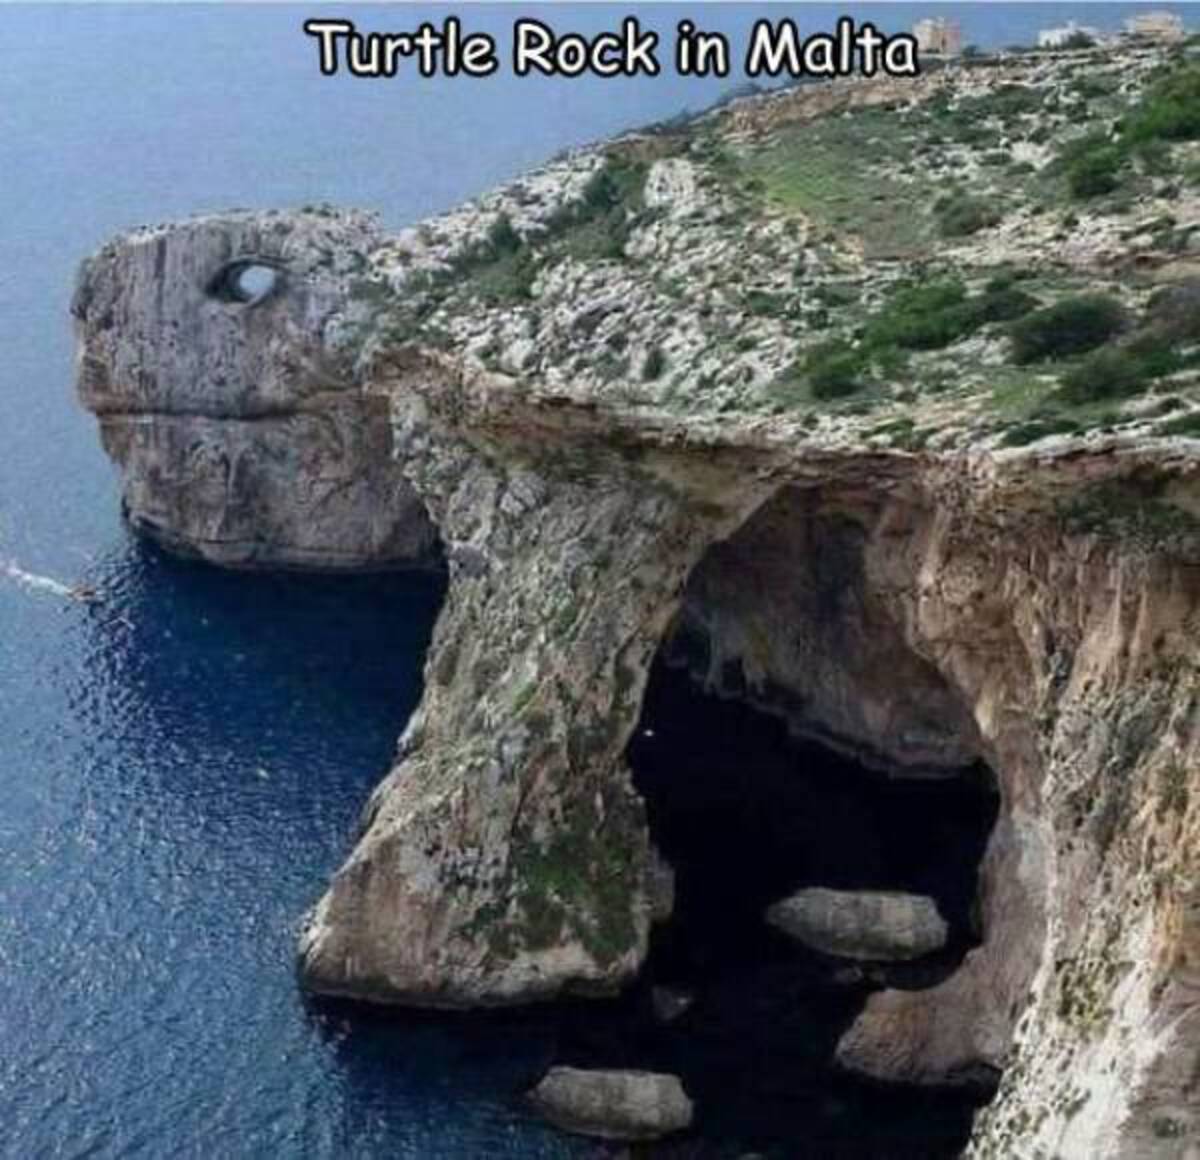 turtle rock malta - Turtle Rock in Malta